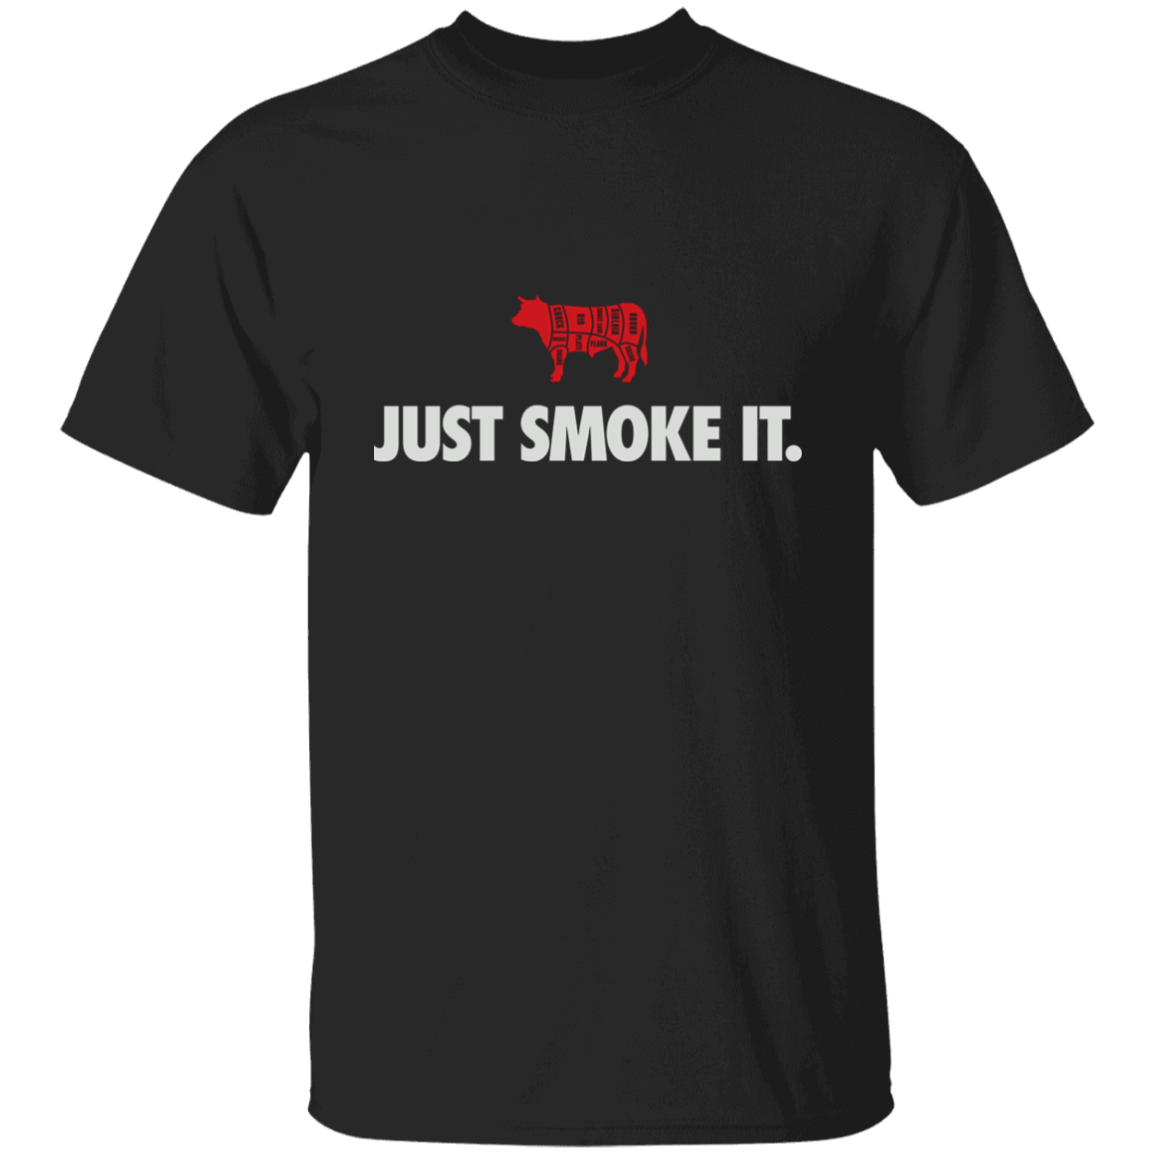 JUST SMOKE IT. Short-Sleeve T-Shirt